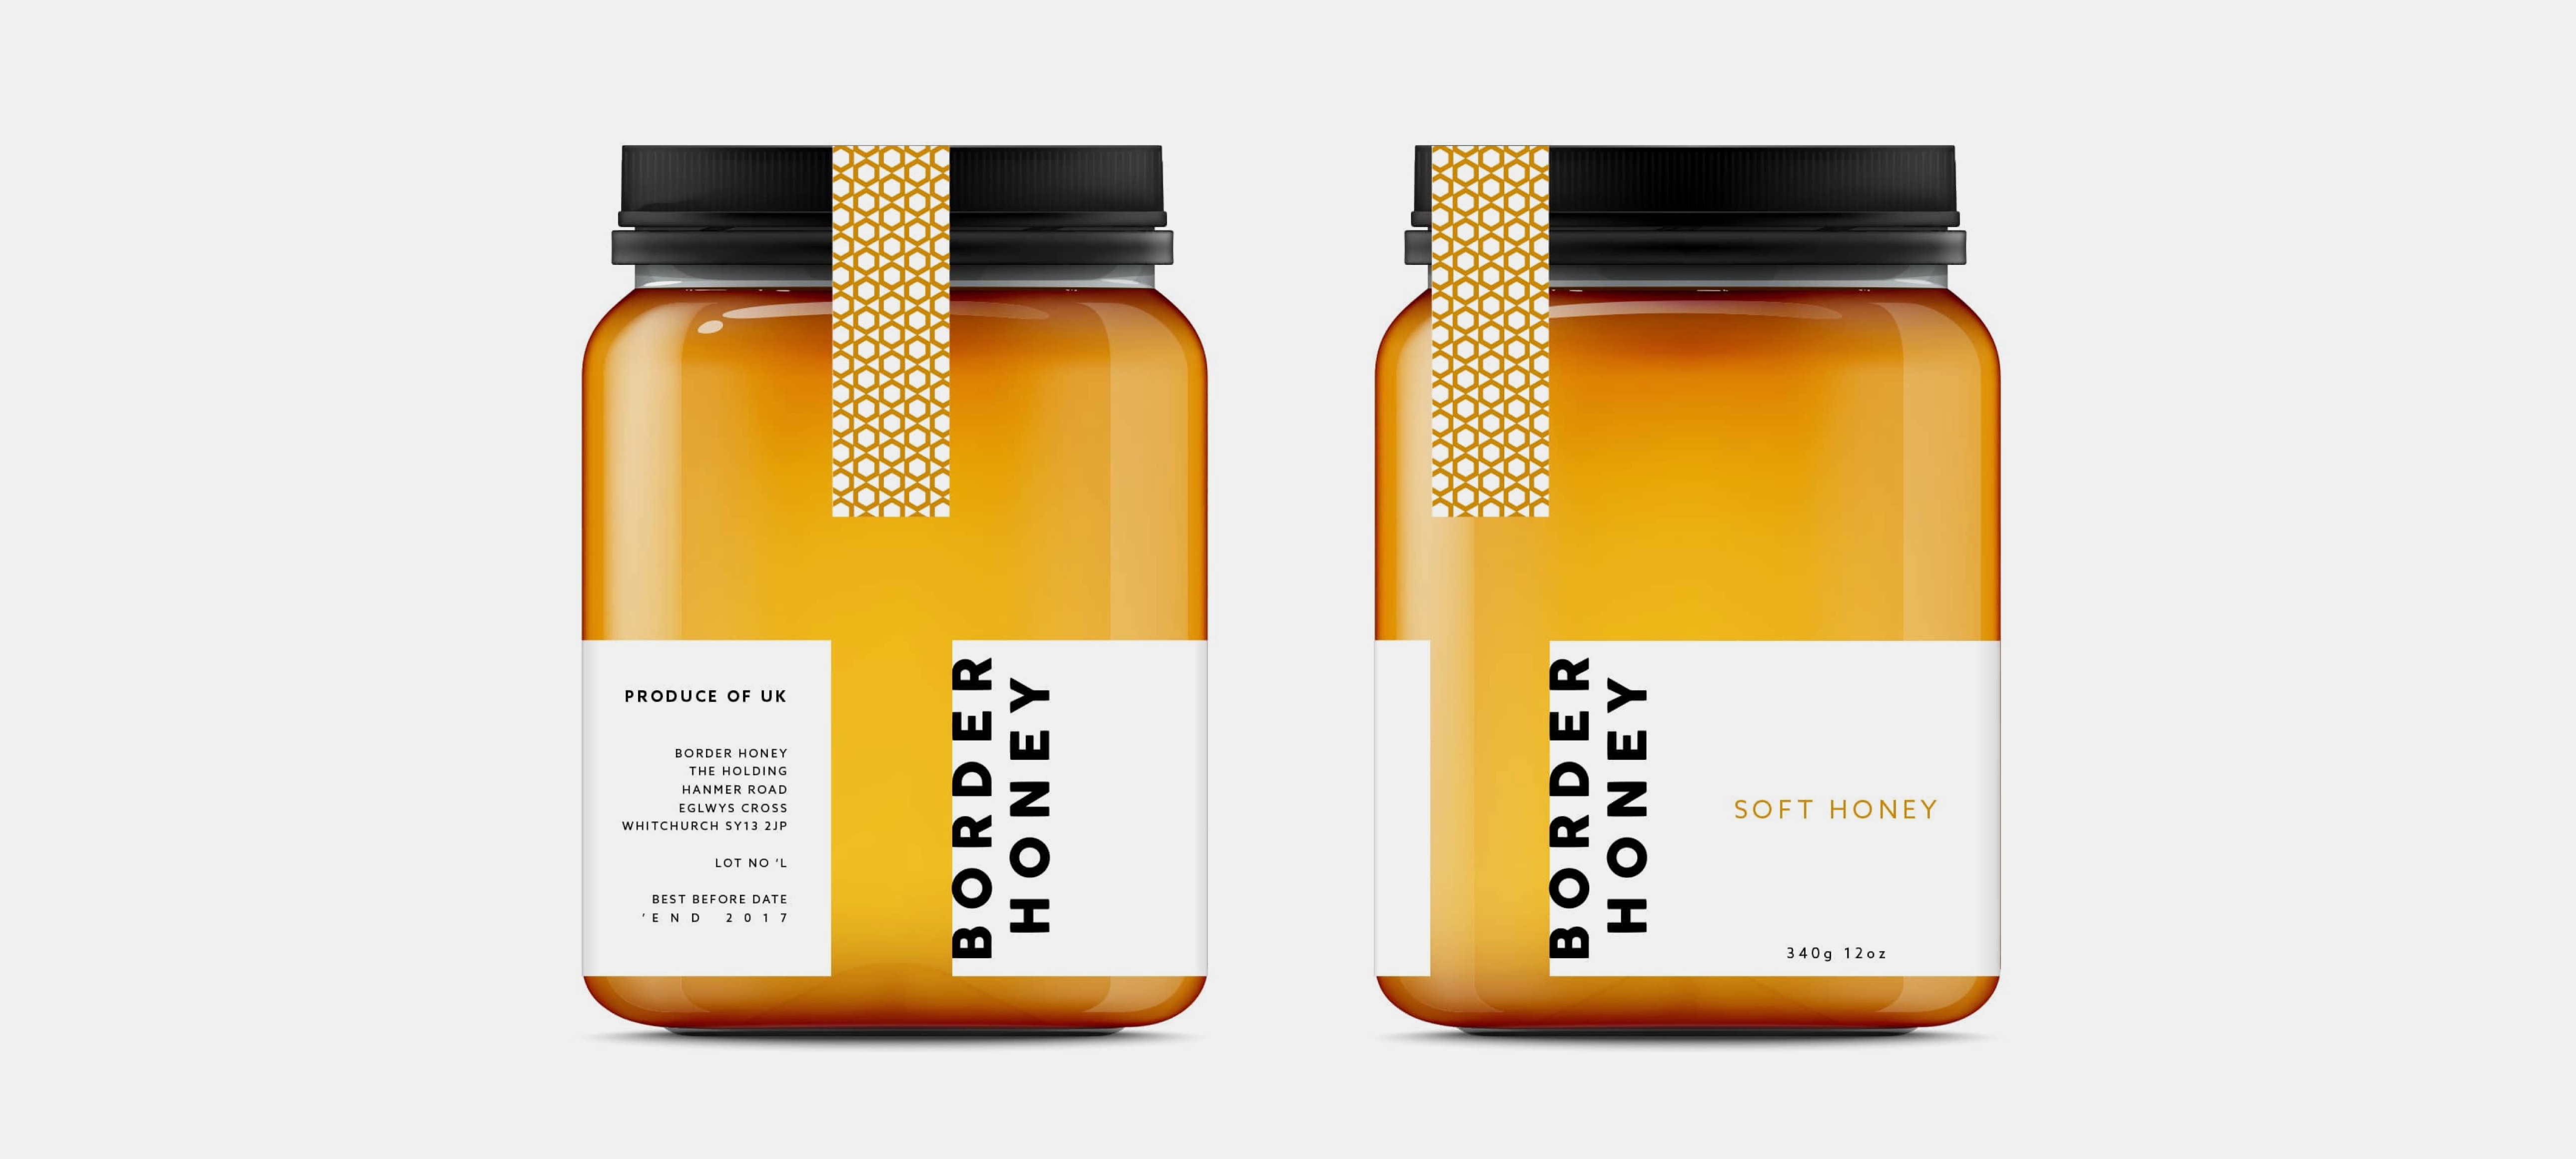 Border Honey Eat Marketing